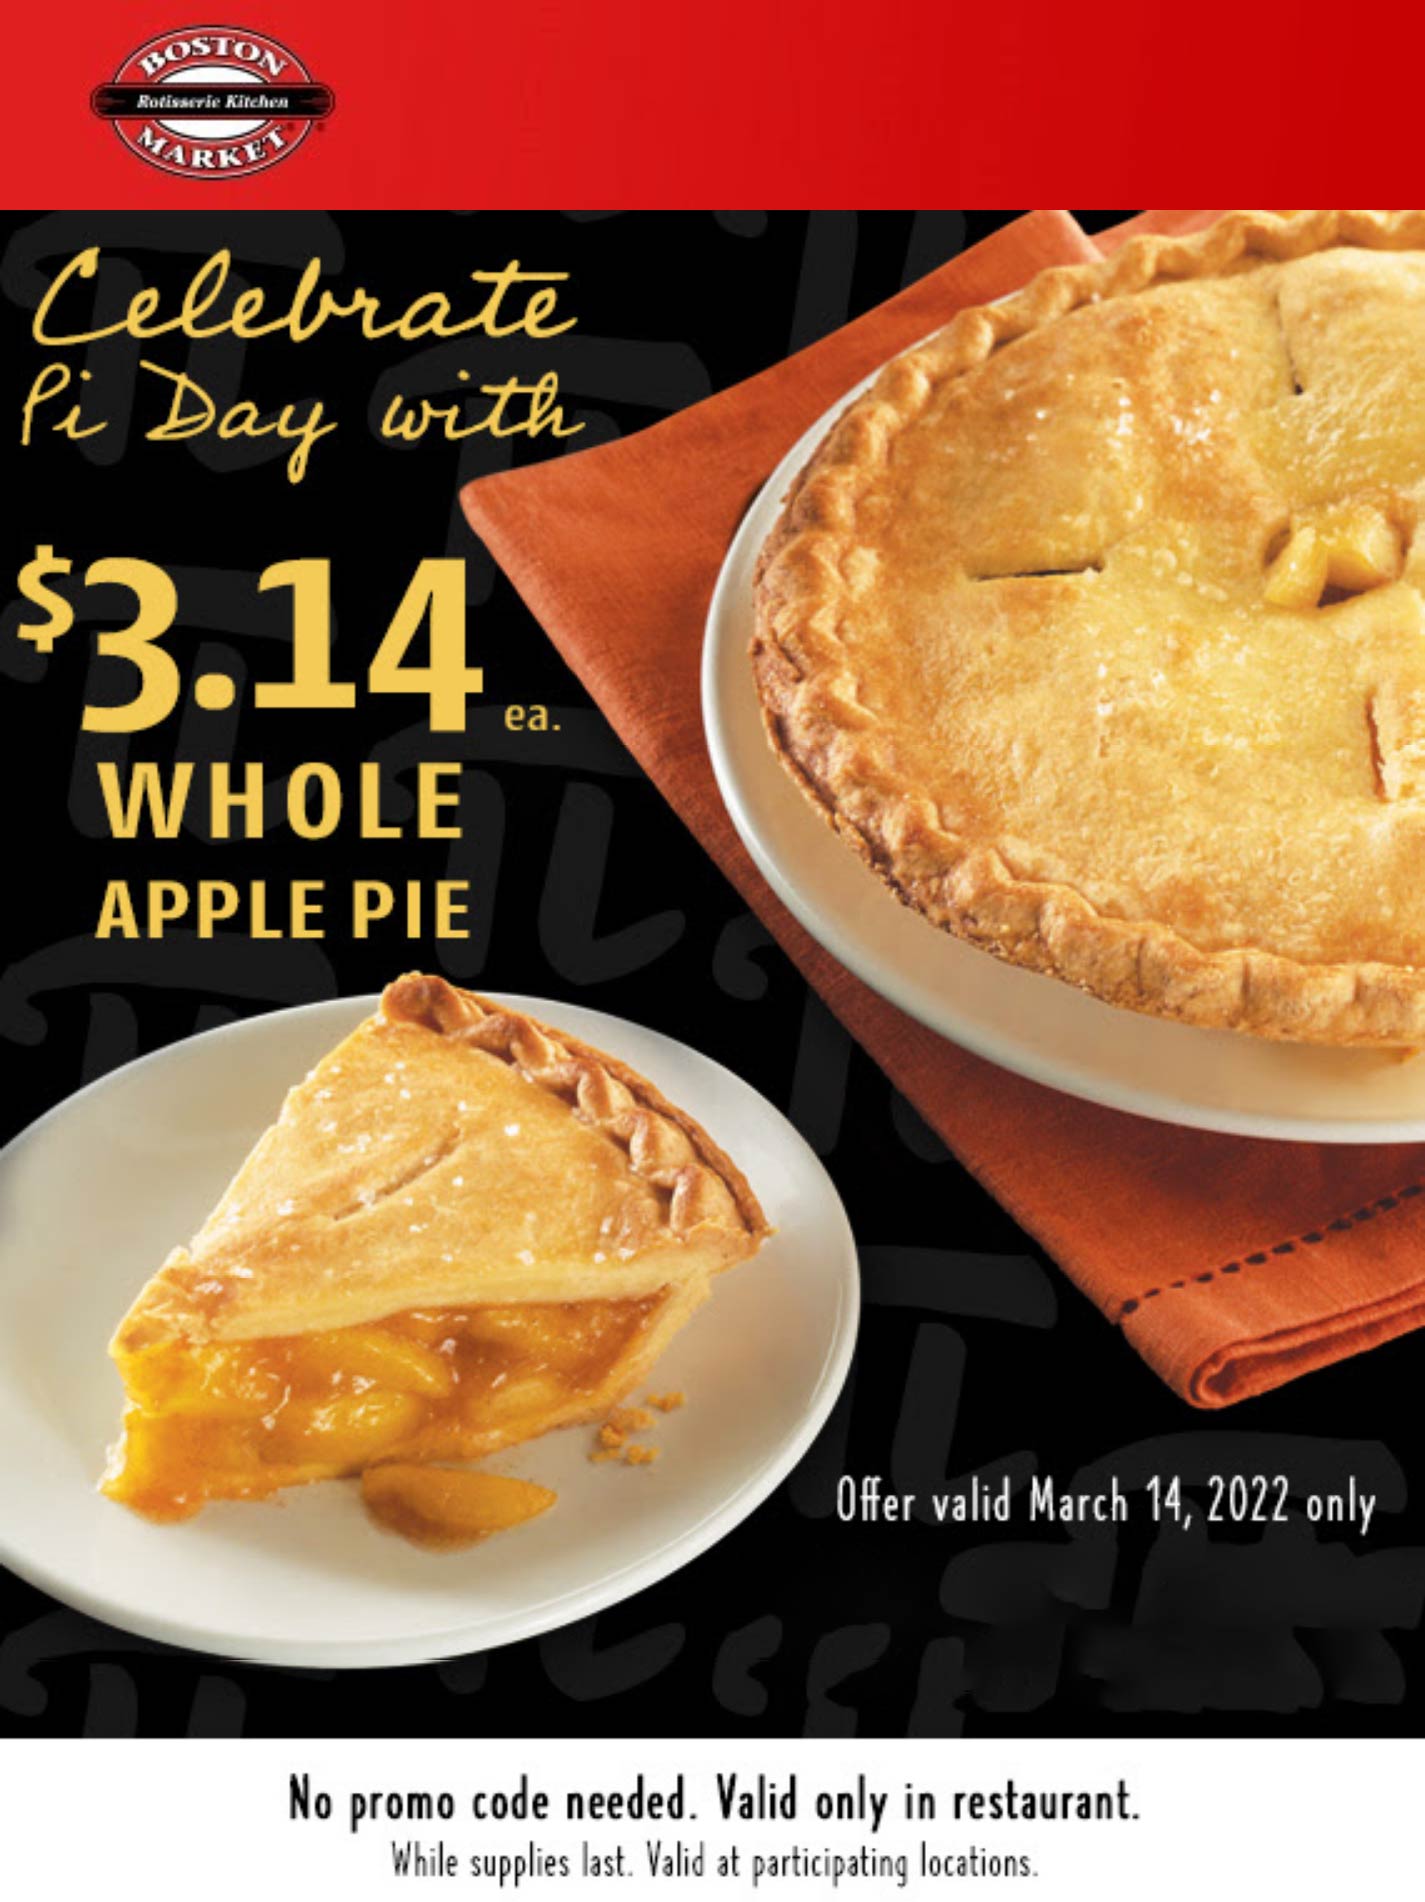 Boston Market restaurants Coupon  $3.14 whole apple pie today at Boston Market #bostonmarket 